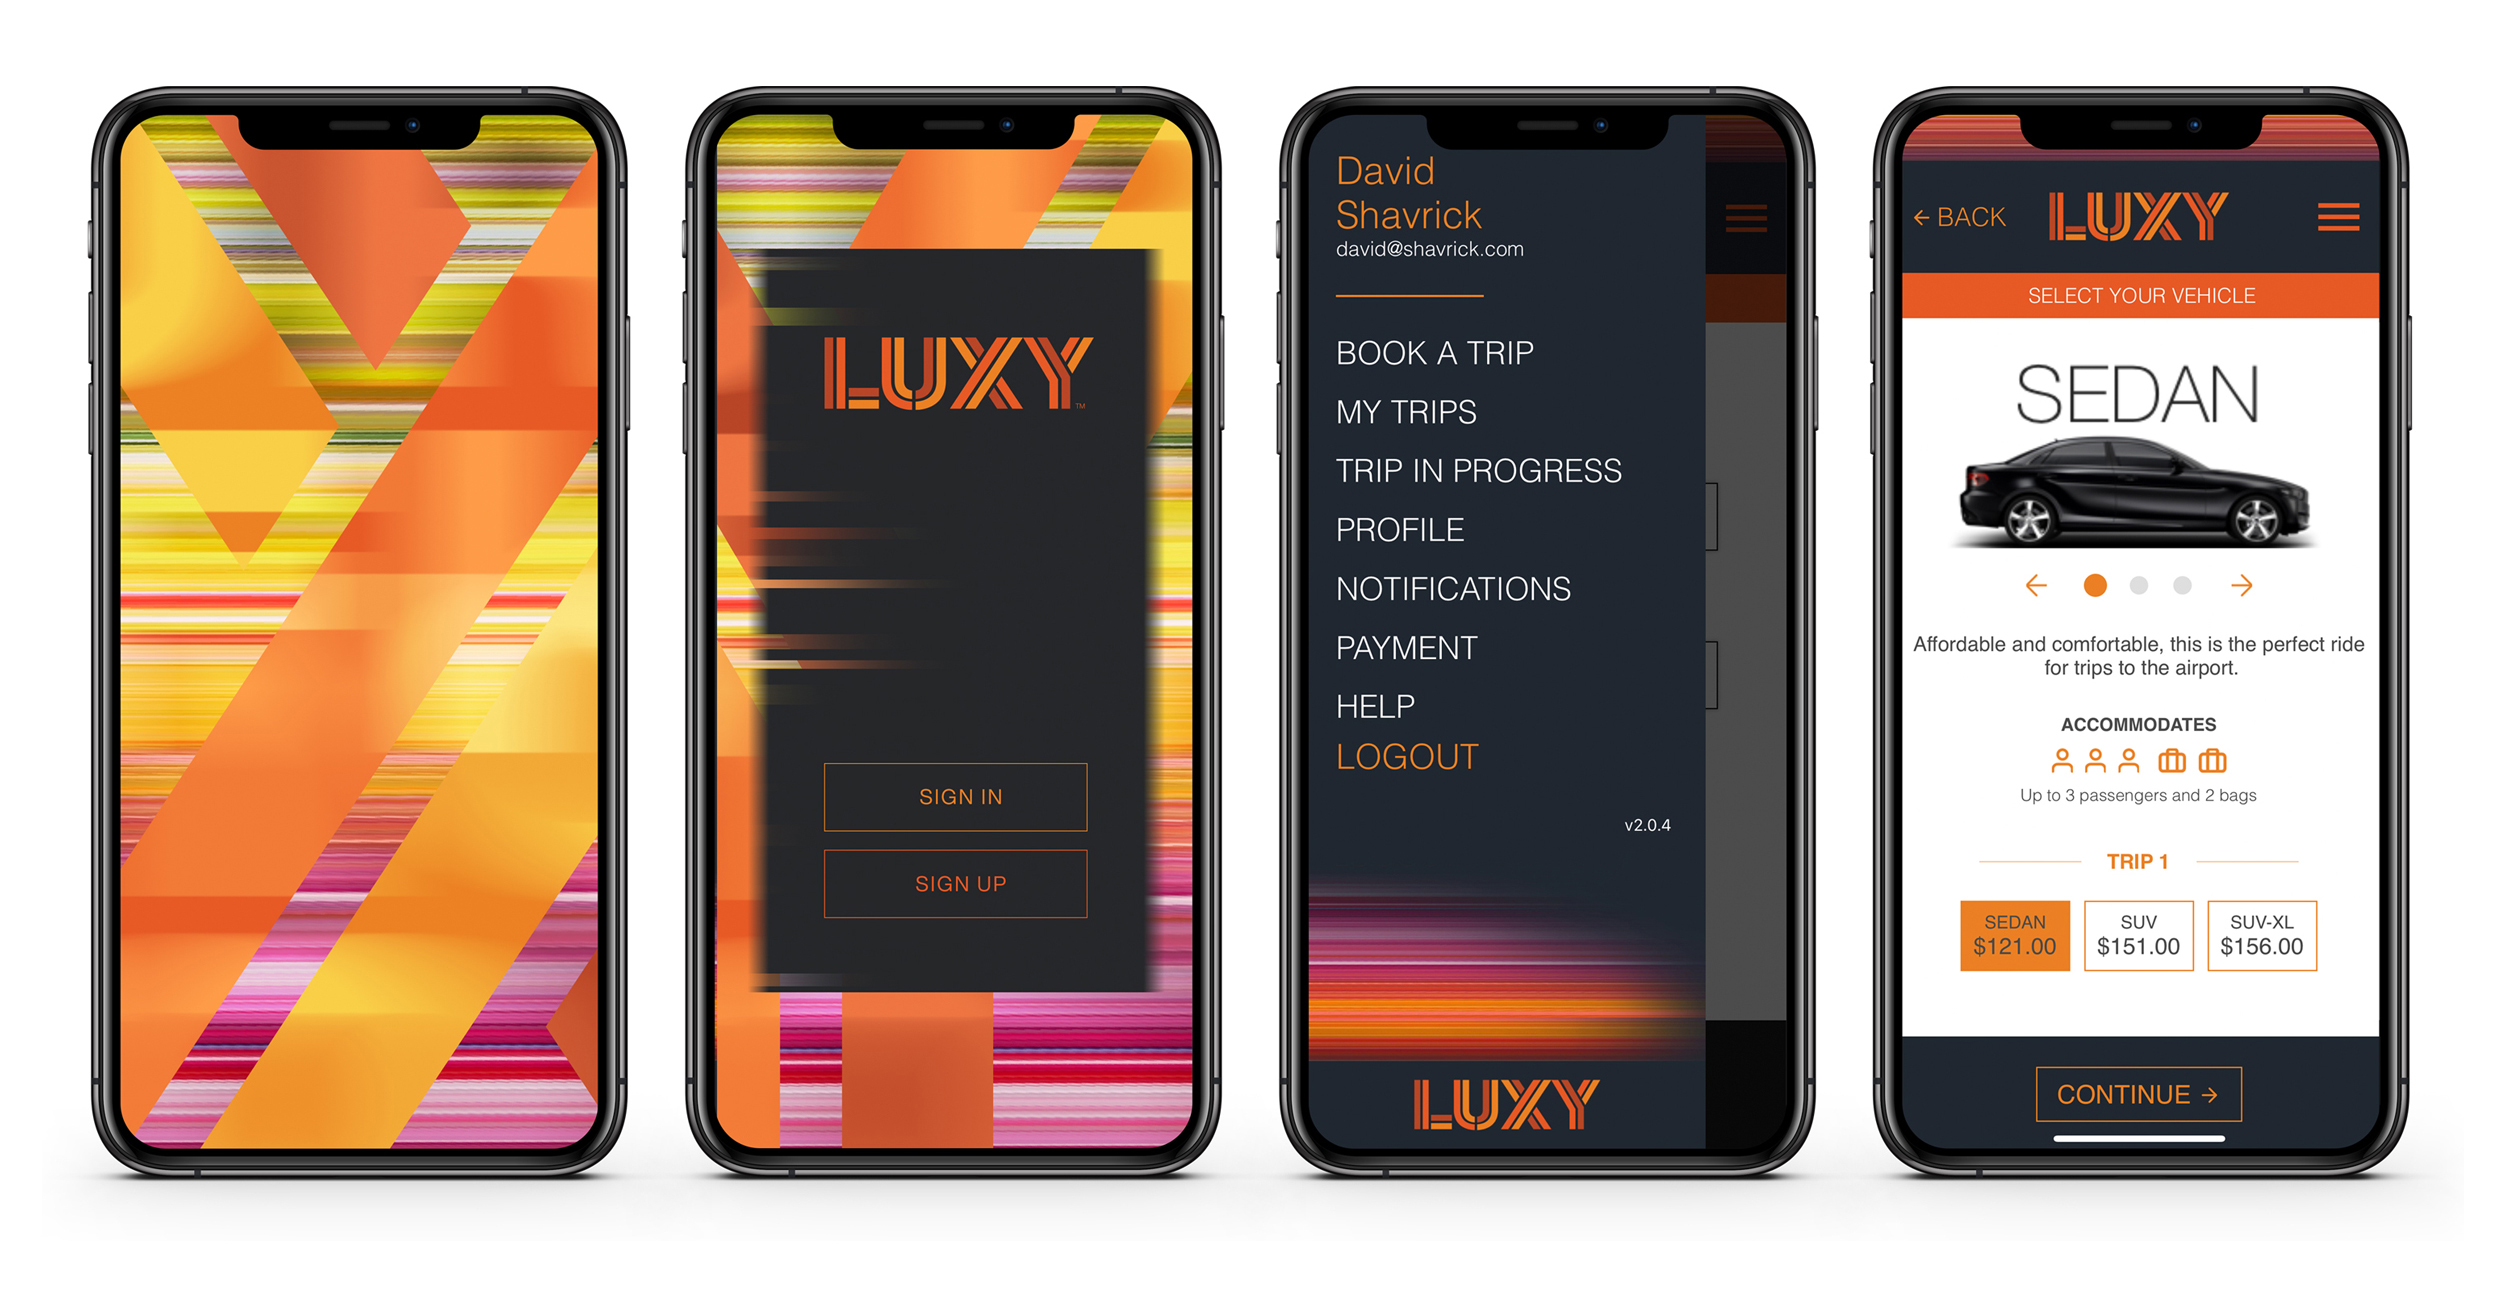 LUXYappscreens23